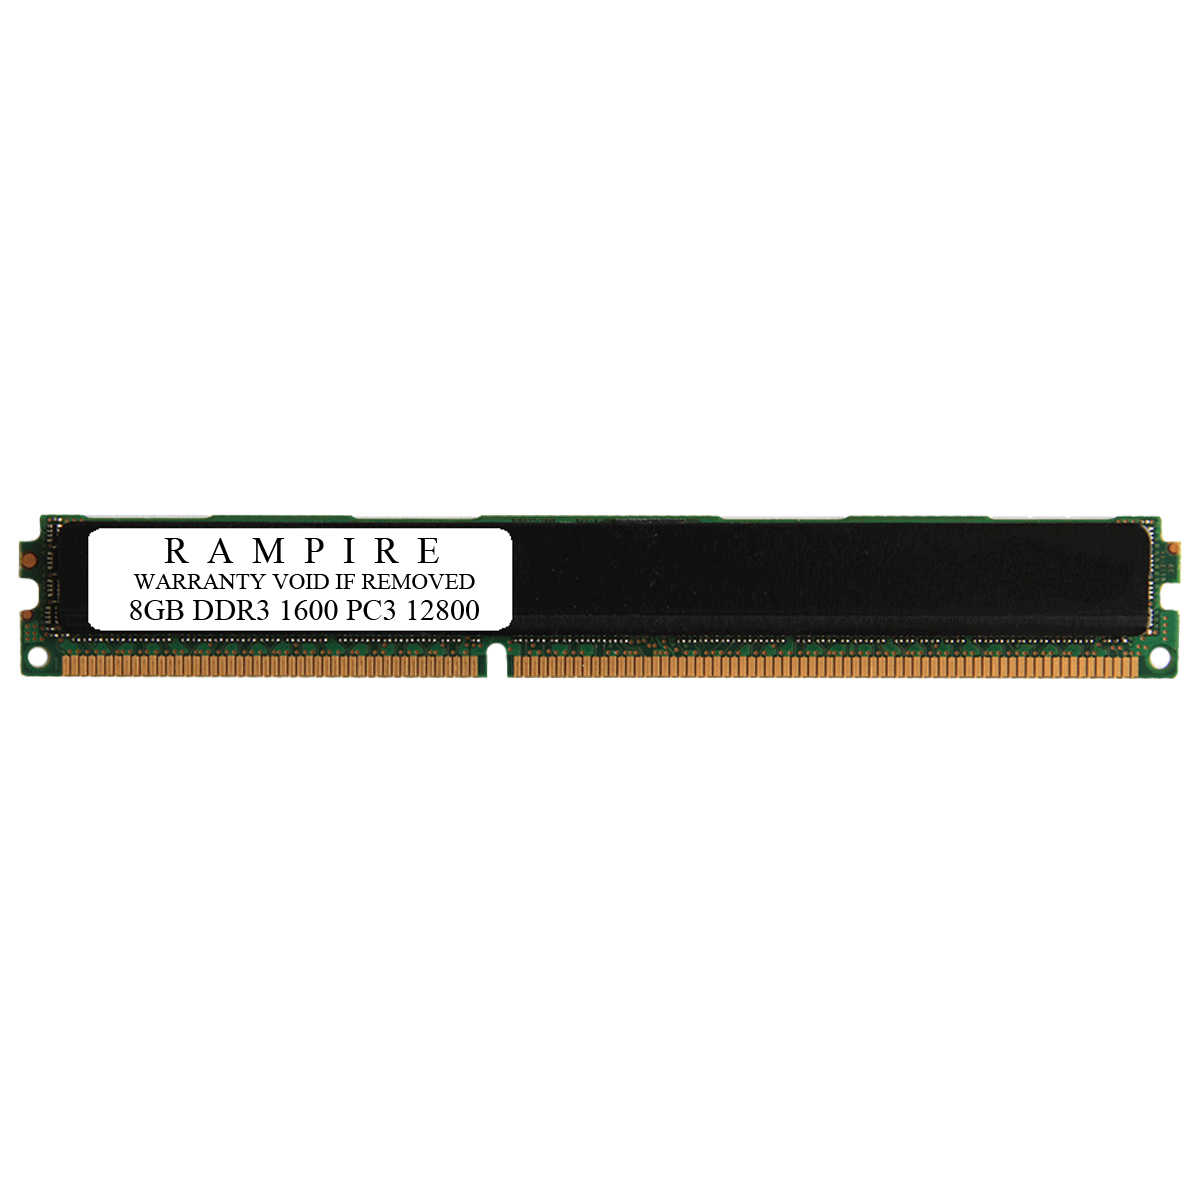 RAMPIRE 8GB DDR3 1600 (PC3 12800) 240-Pin SDRAM 2Rx8 VLP (Low Profile) 1.35V ECC Registered Server Memory